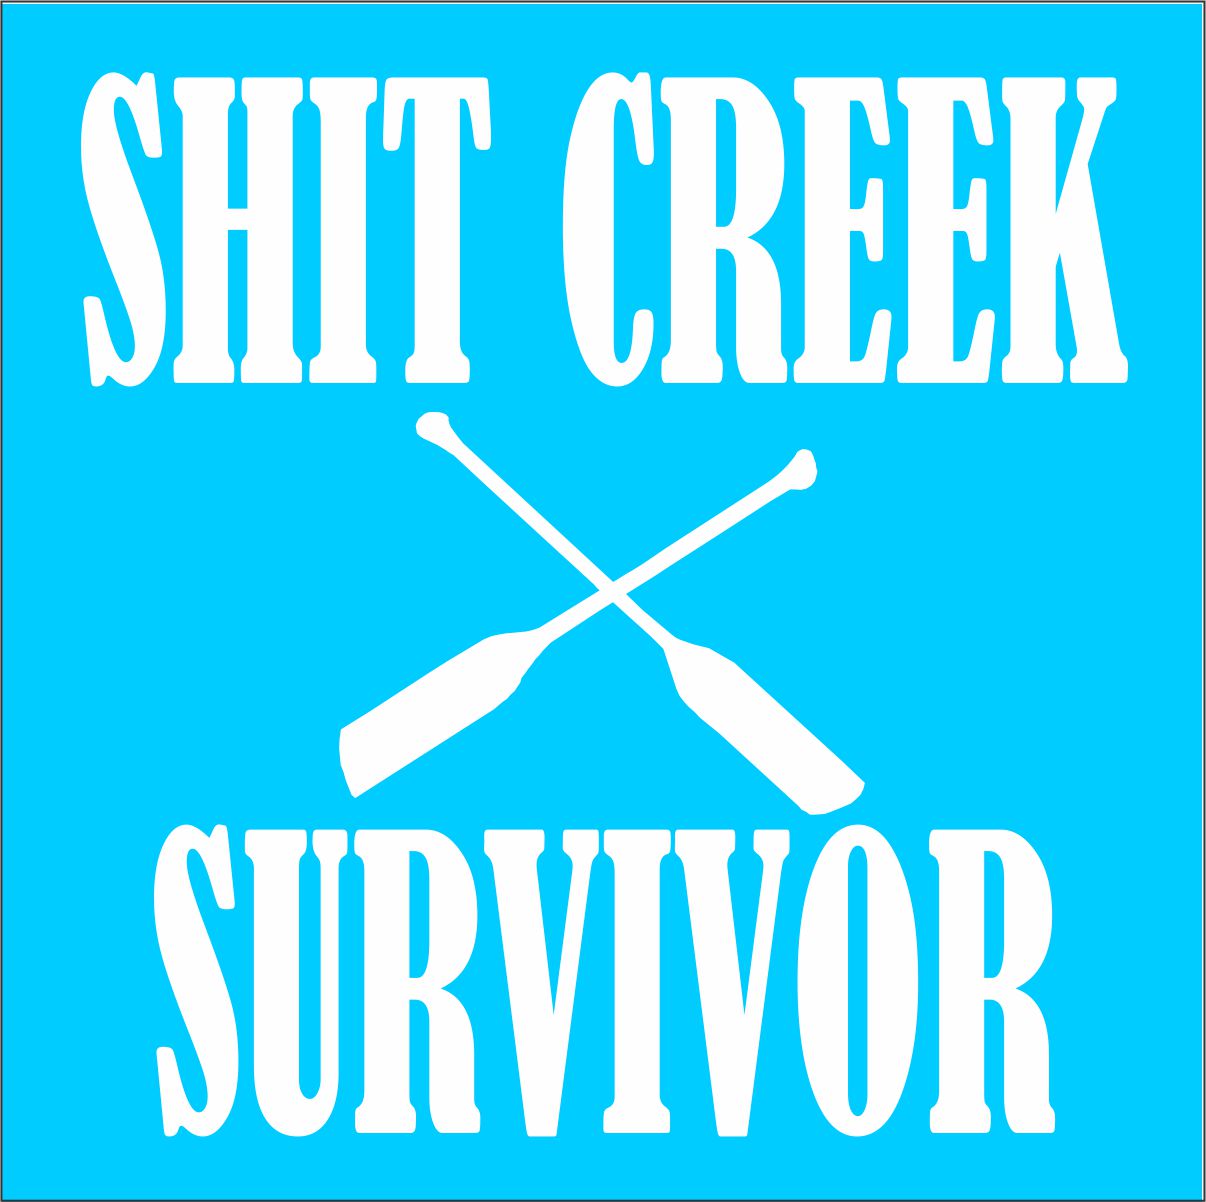 Shit Creek Survivor Stencil - Funny Stencil - Superior Stencils